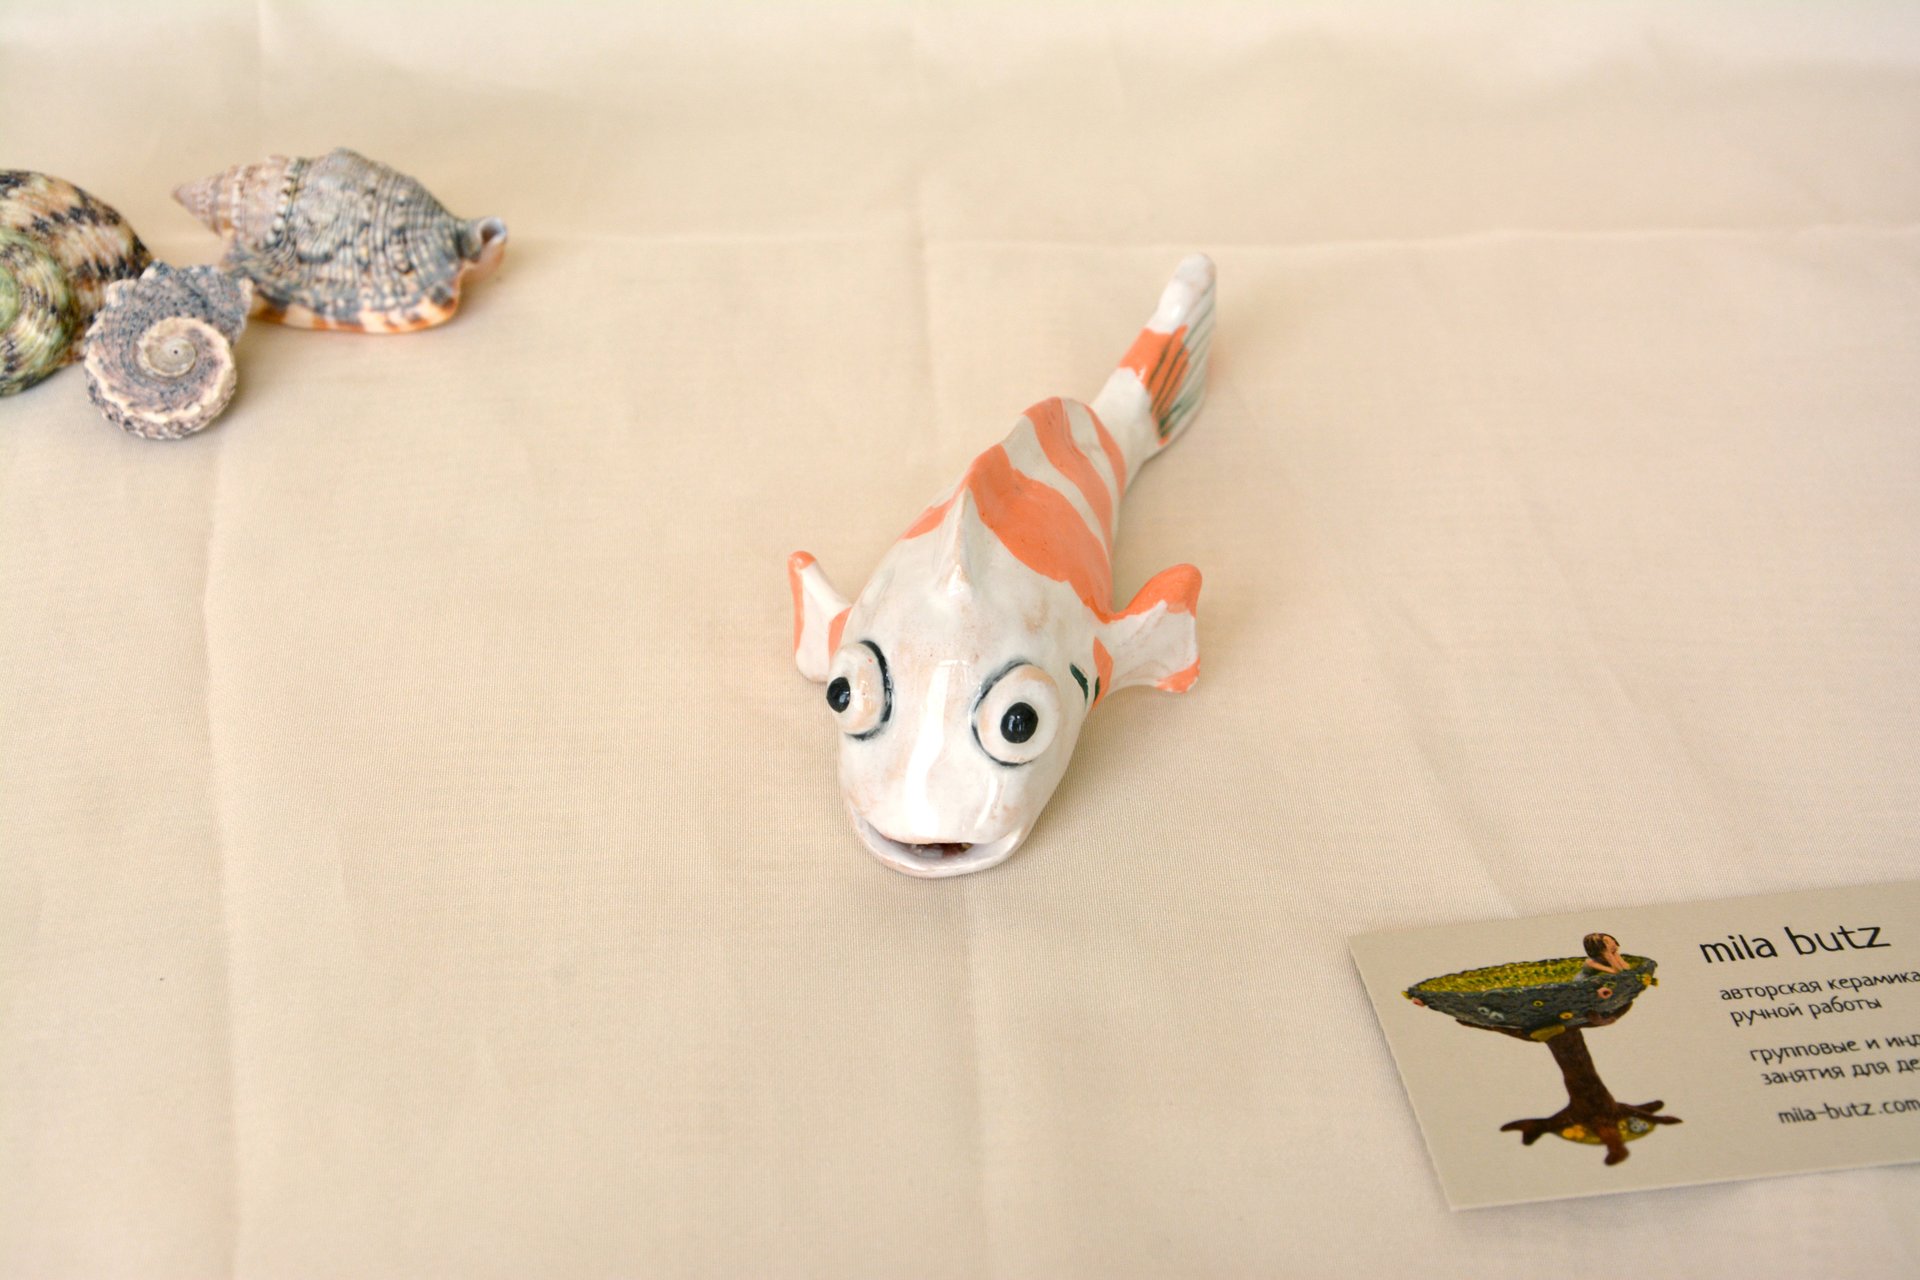 Ceramic Figurine of the Koi fish carp, length - 14 cm, width - 6 cm, height - 5 cm, photo 5 of 6.